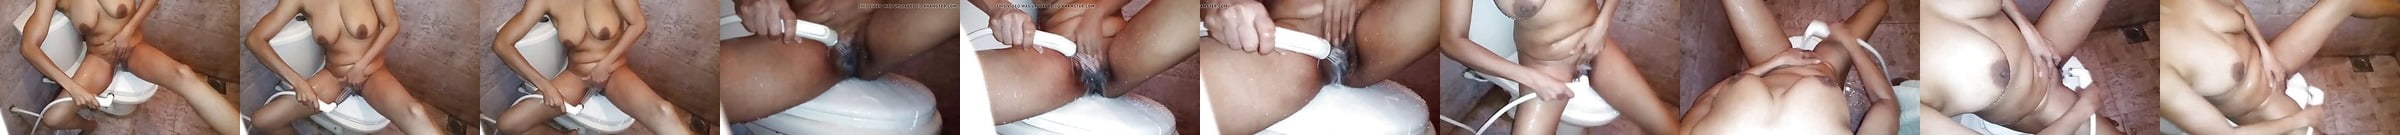 Featured Sri Lankan Girl Outdoor Bath Porn Videos Xhamster